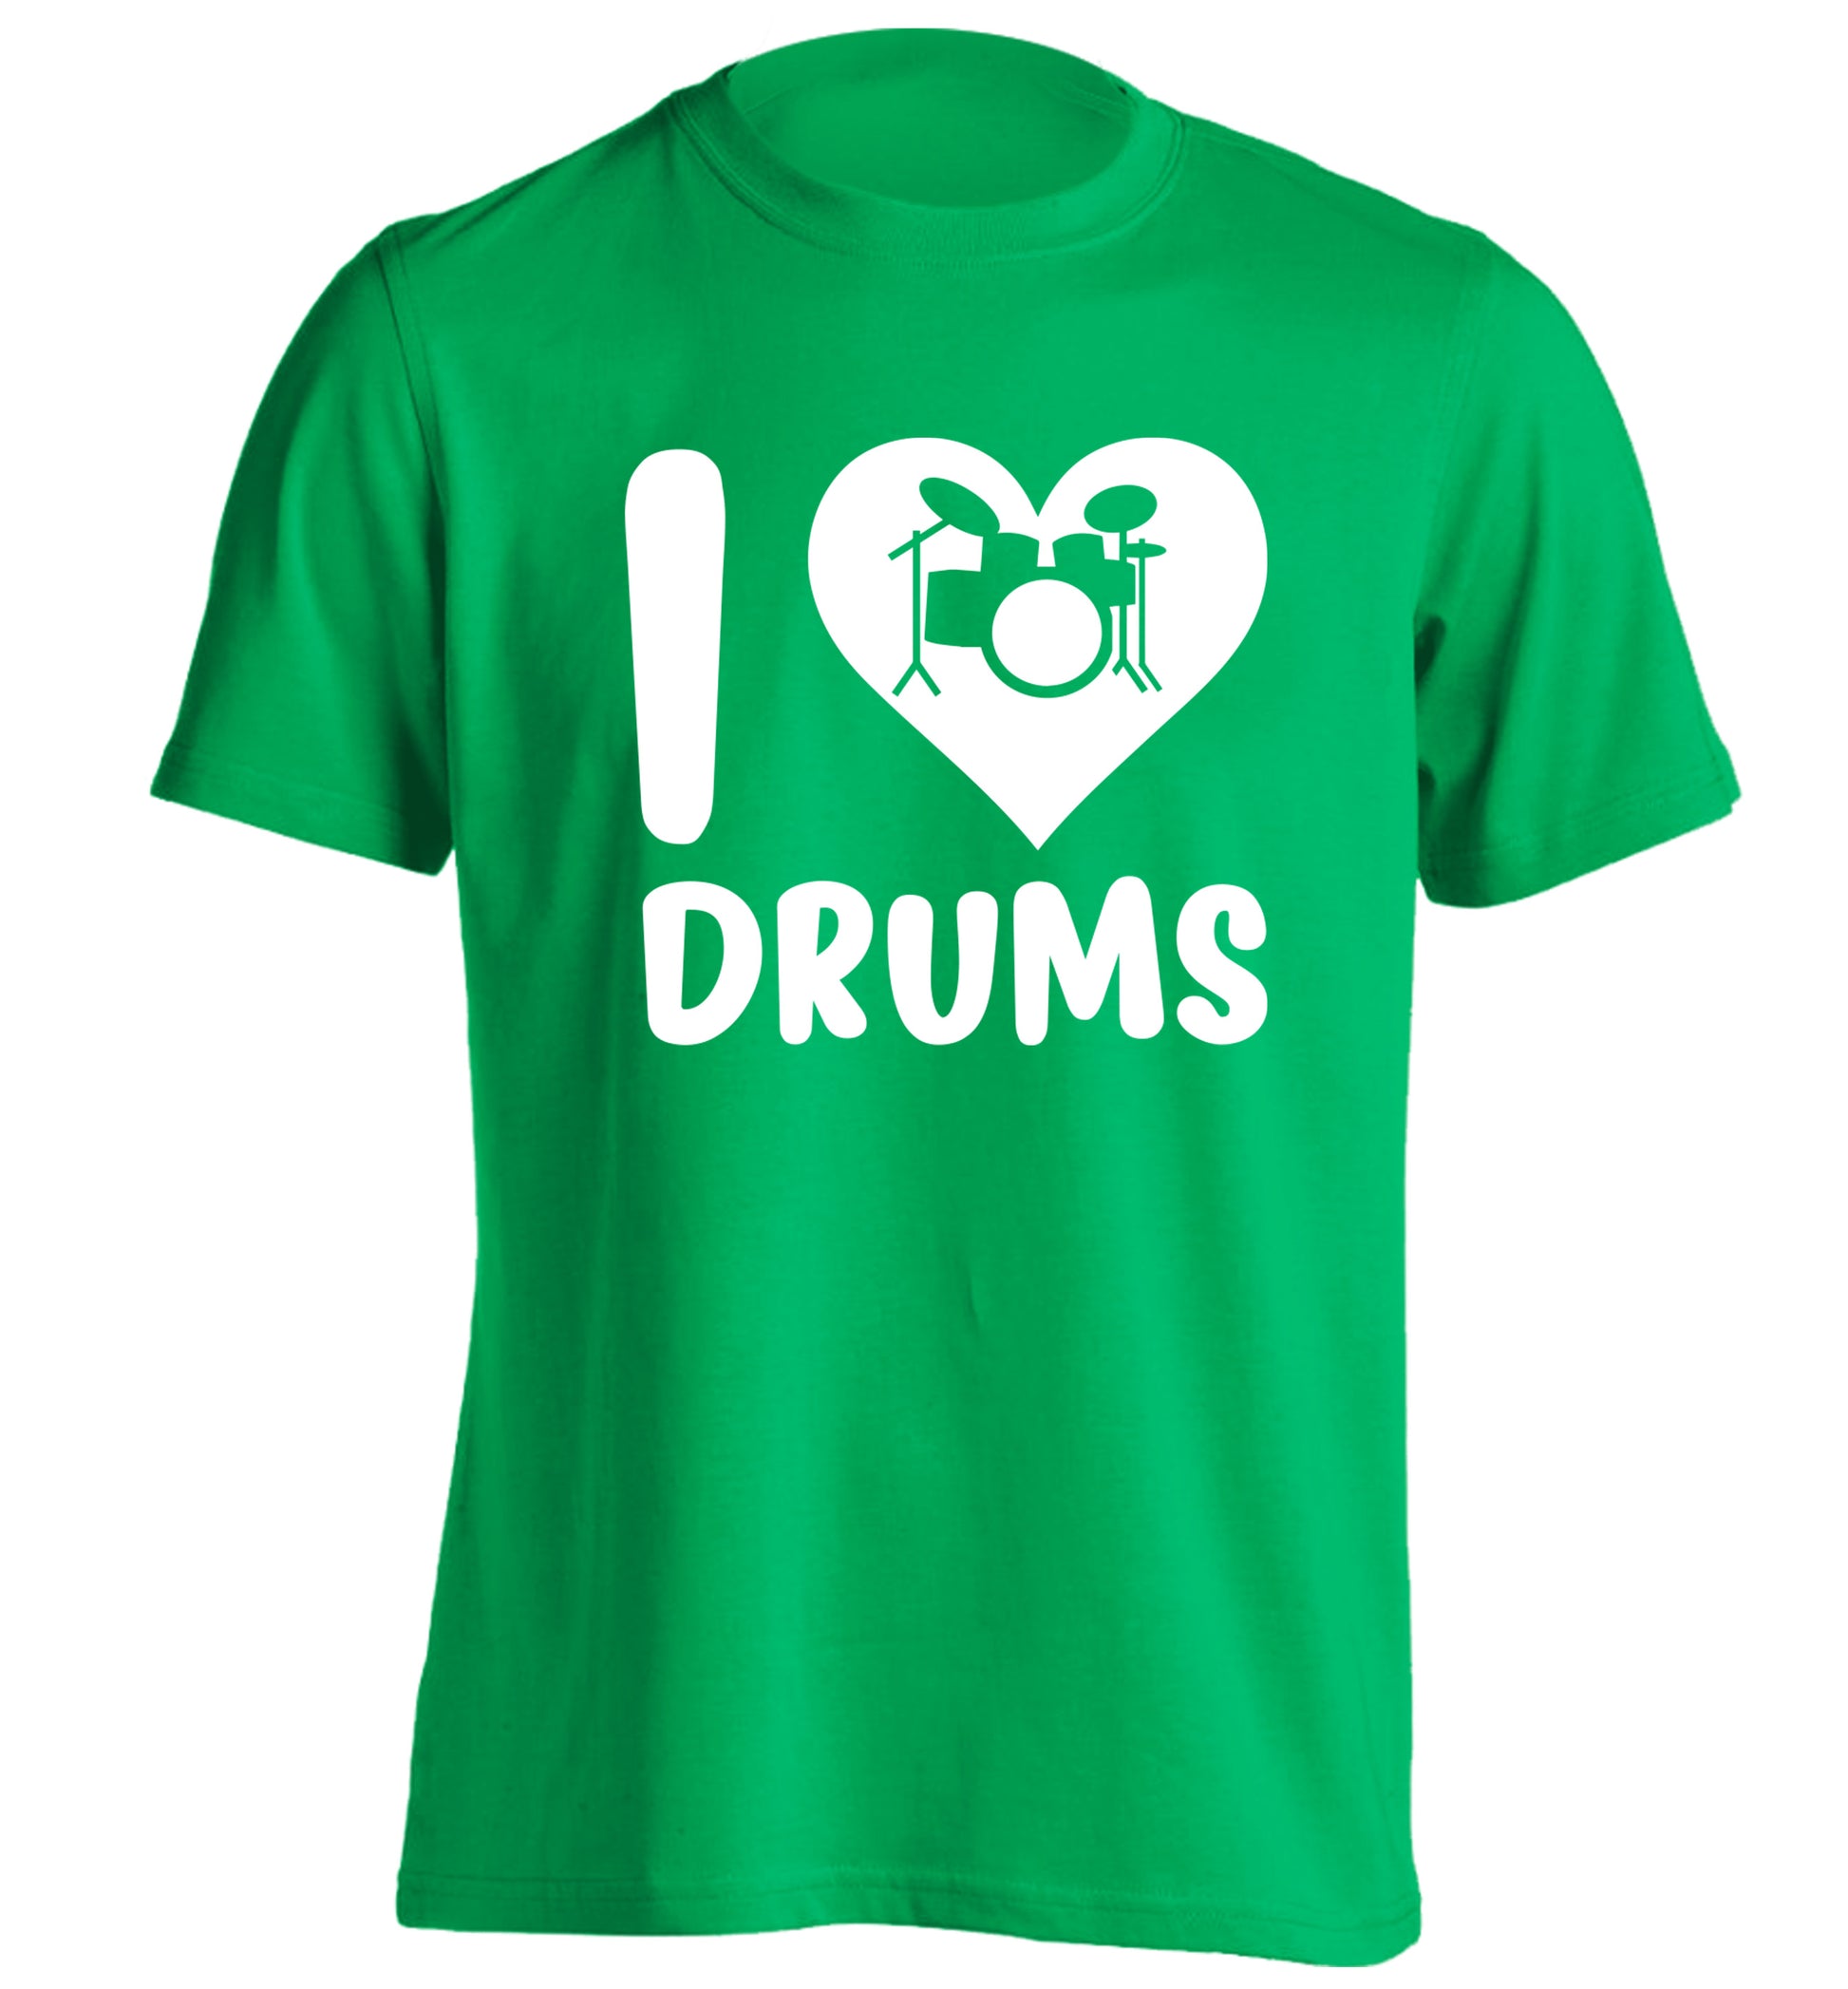 I love drums adults unisex green Tshirt 2XL